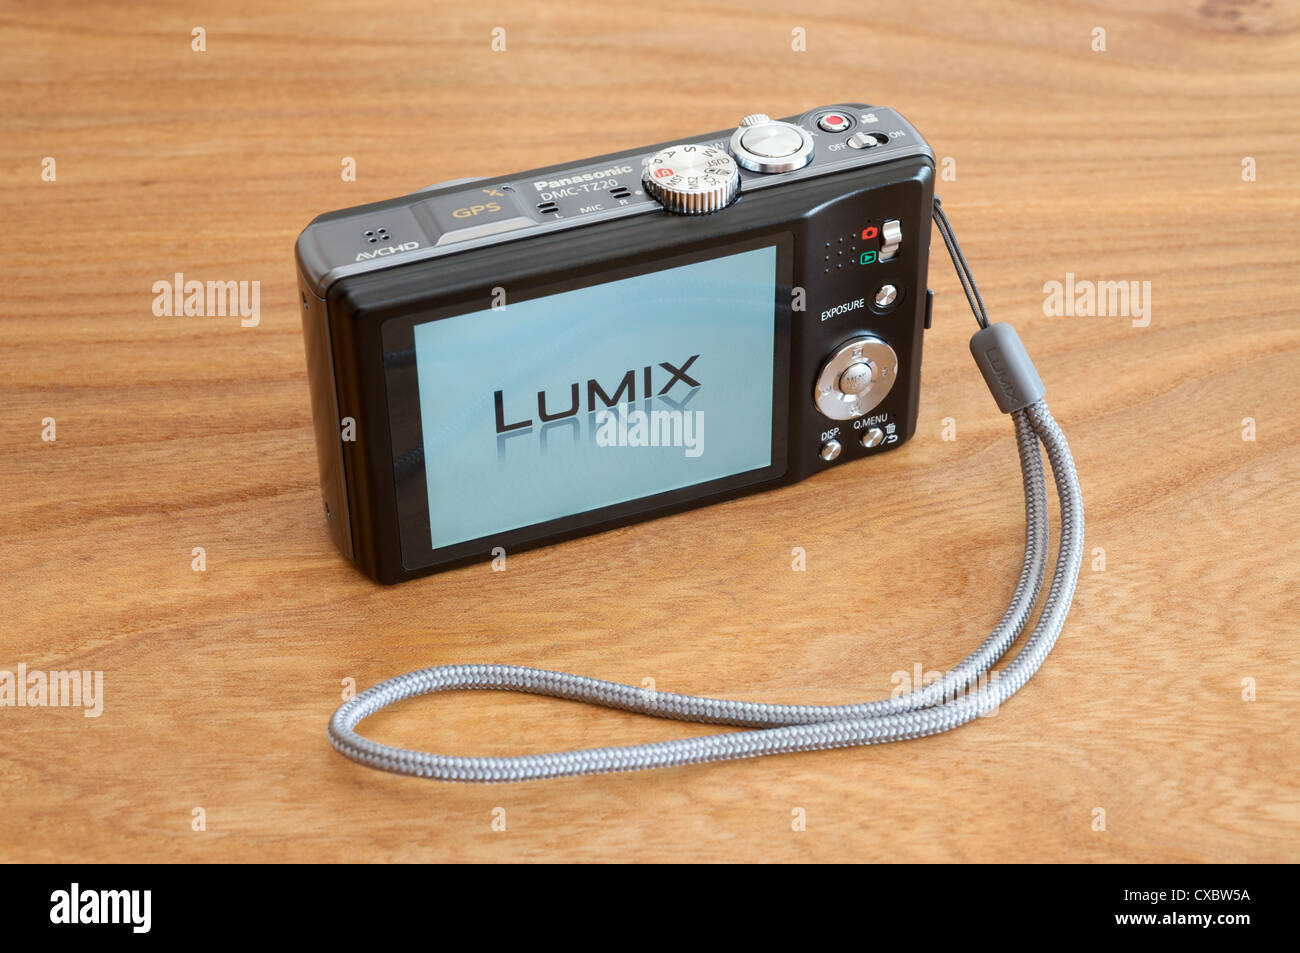 hout Me maximaliseren Panasonic Lumix TZ20 digital camera Stock Photo - Alamy